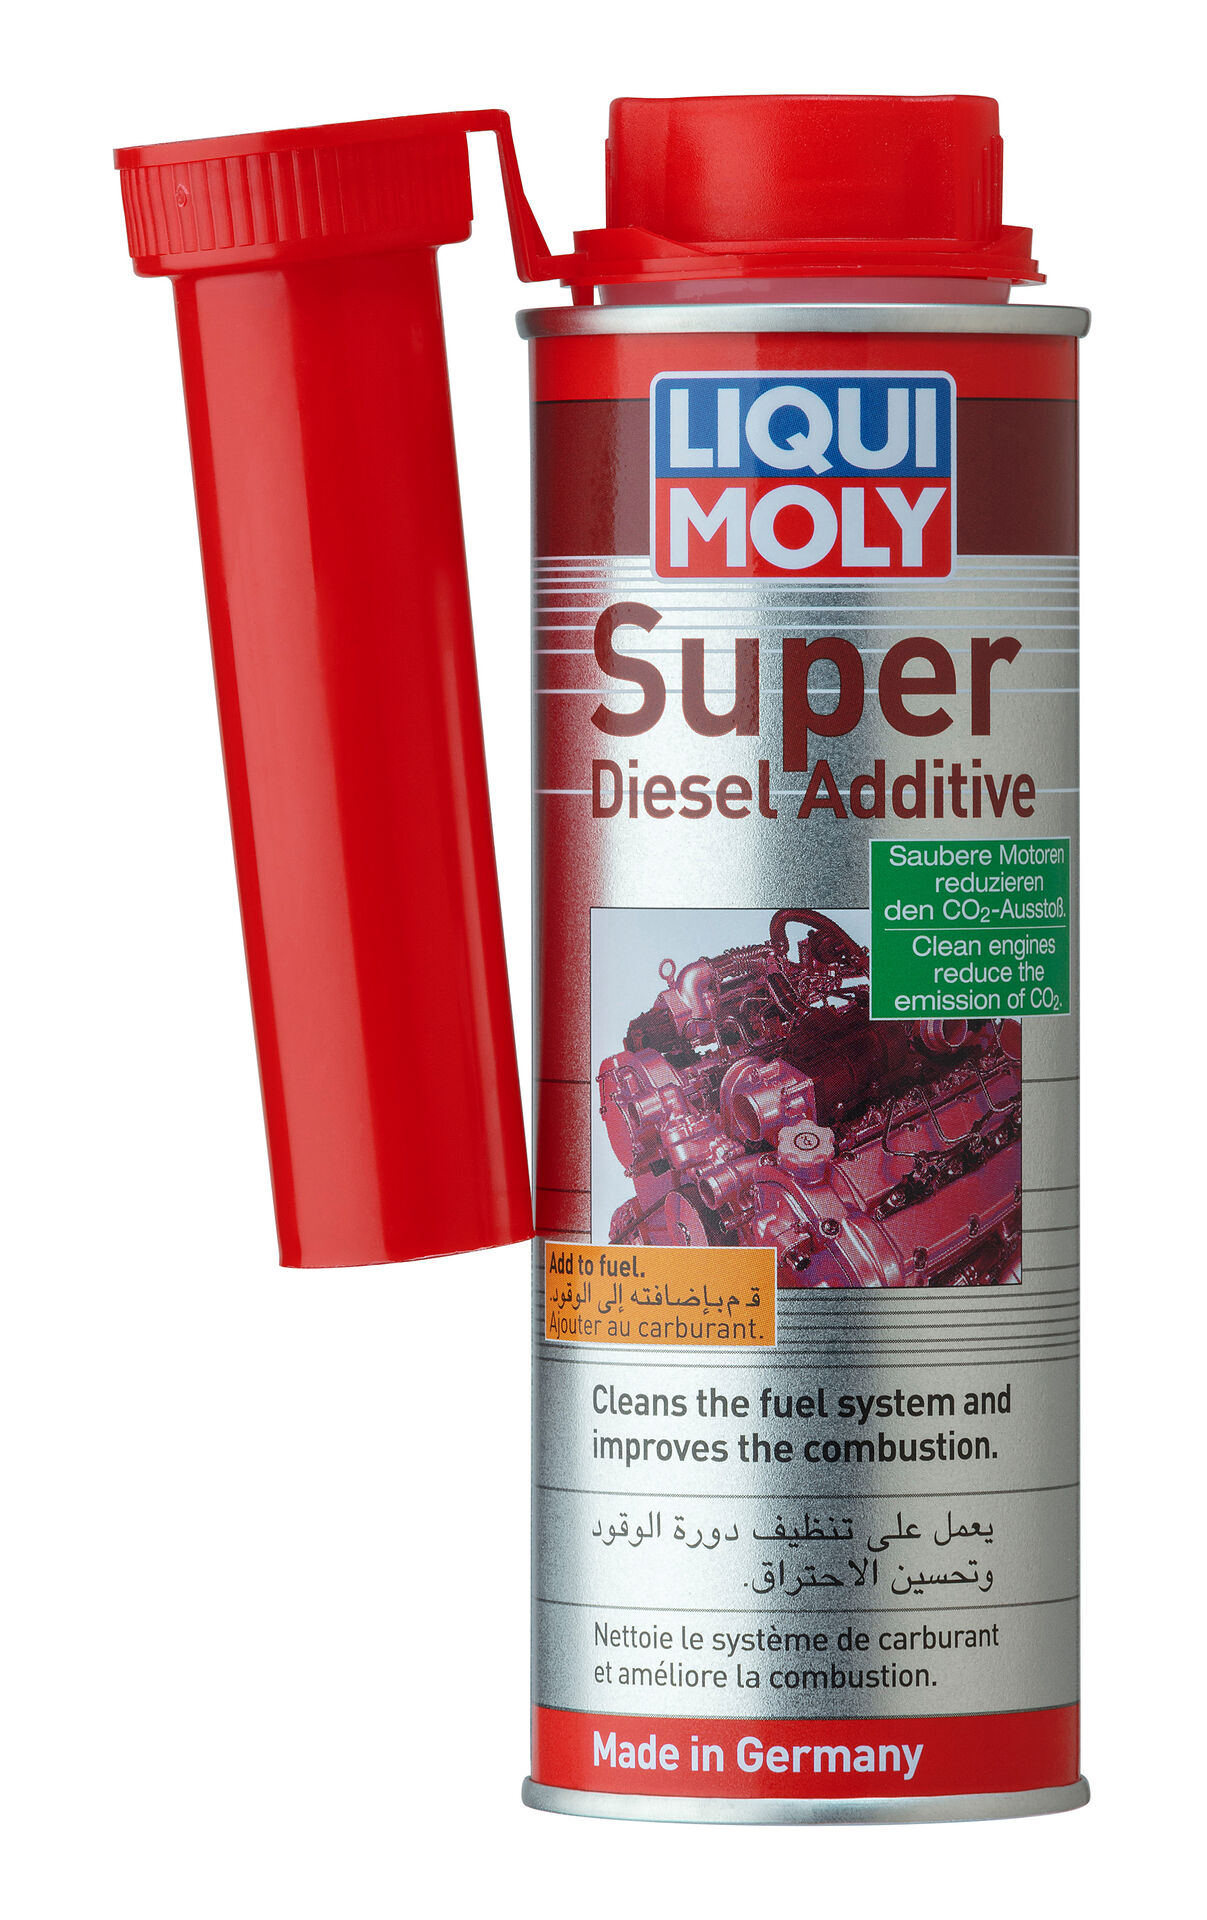  LIQUI MOLY Super Diesel Additive, 300 ml, Diesel additive